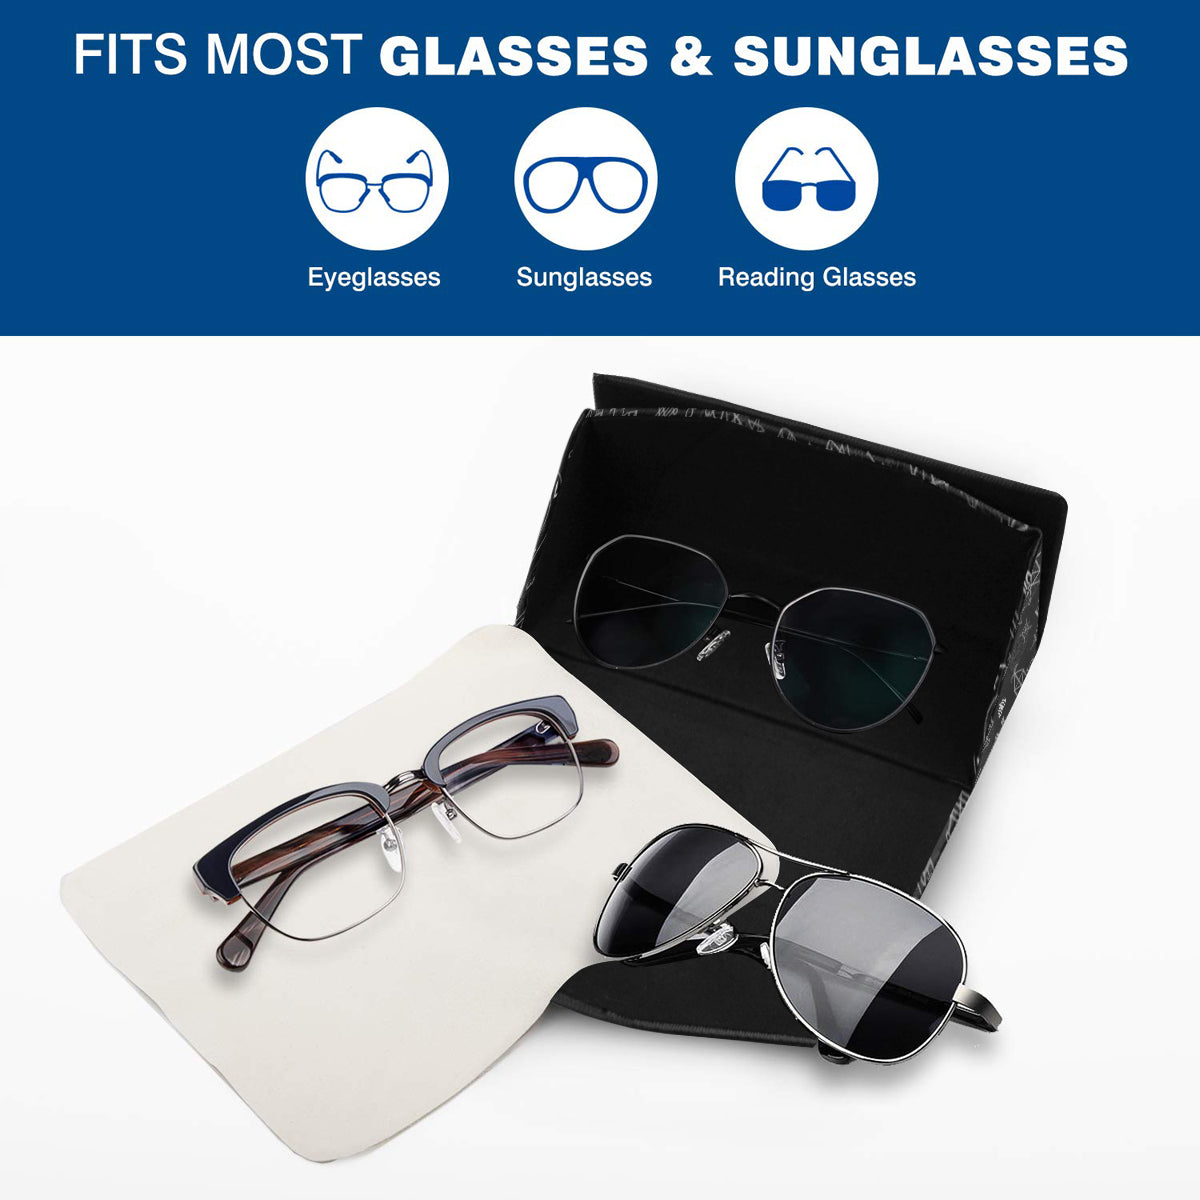 The Baphomet Foldable Glasses Case